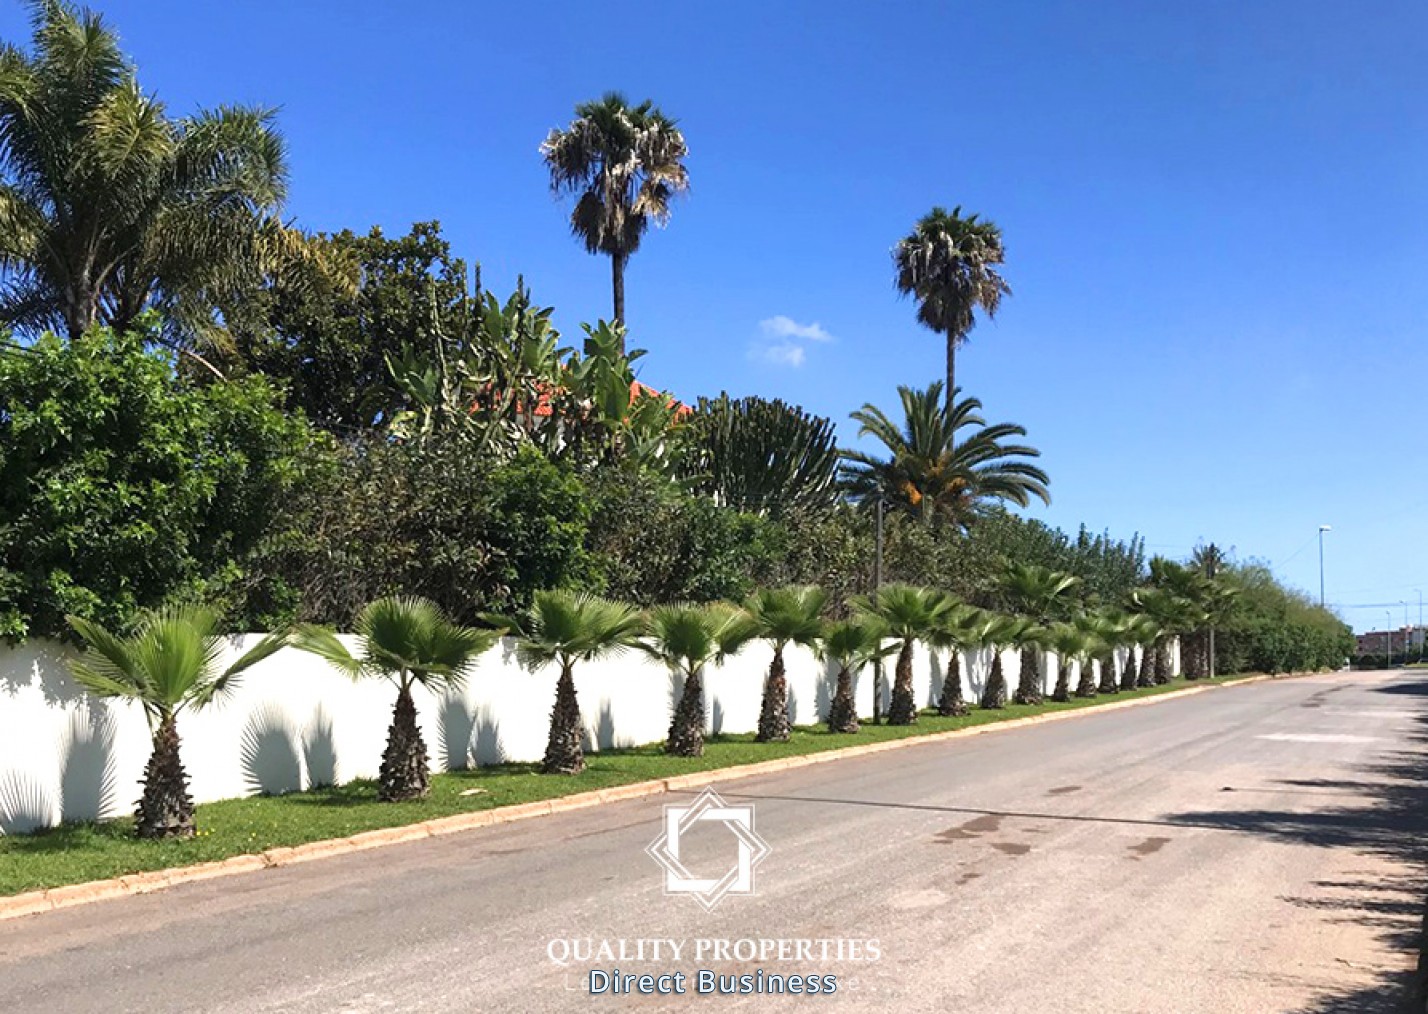 Offre de terrain en zone villas à Californie, Casablanca